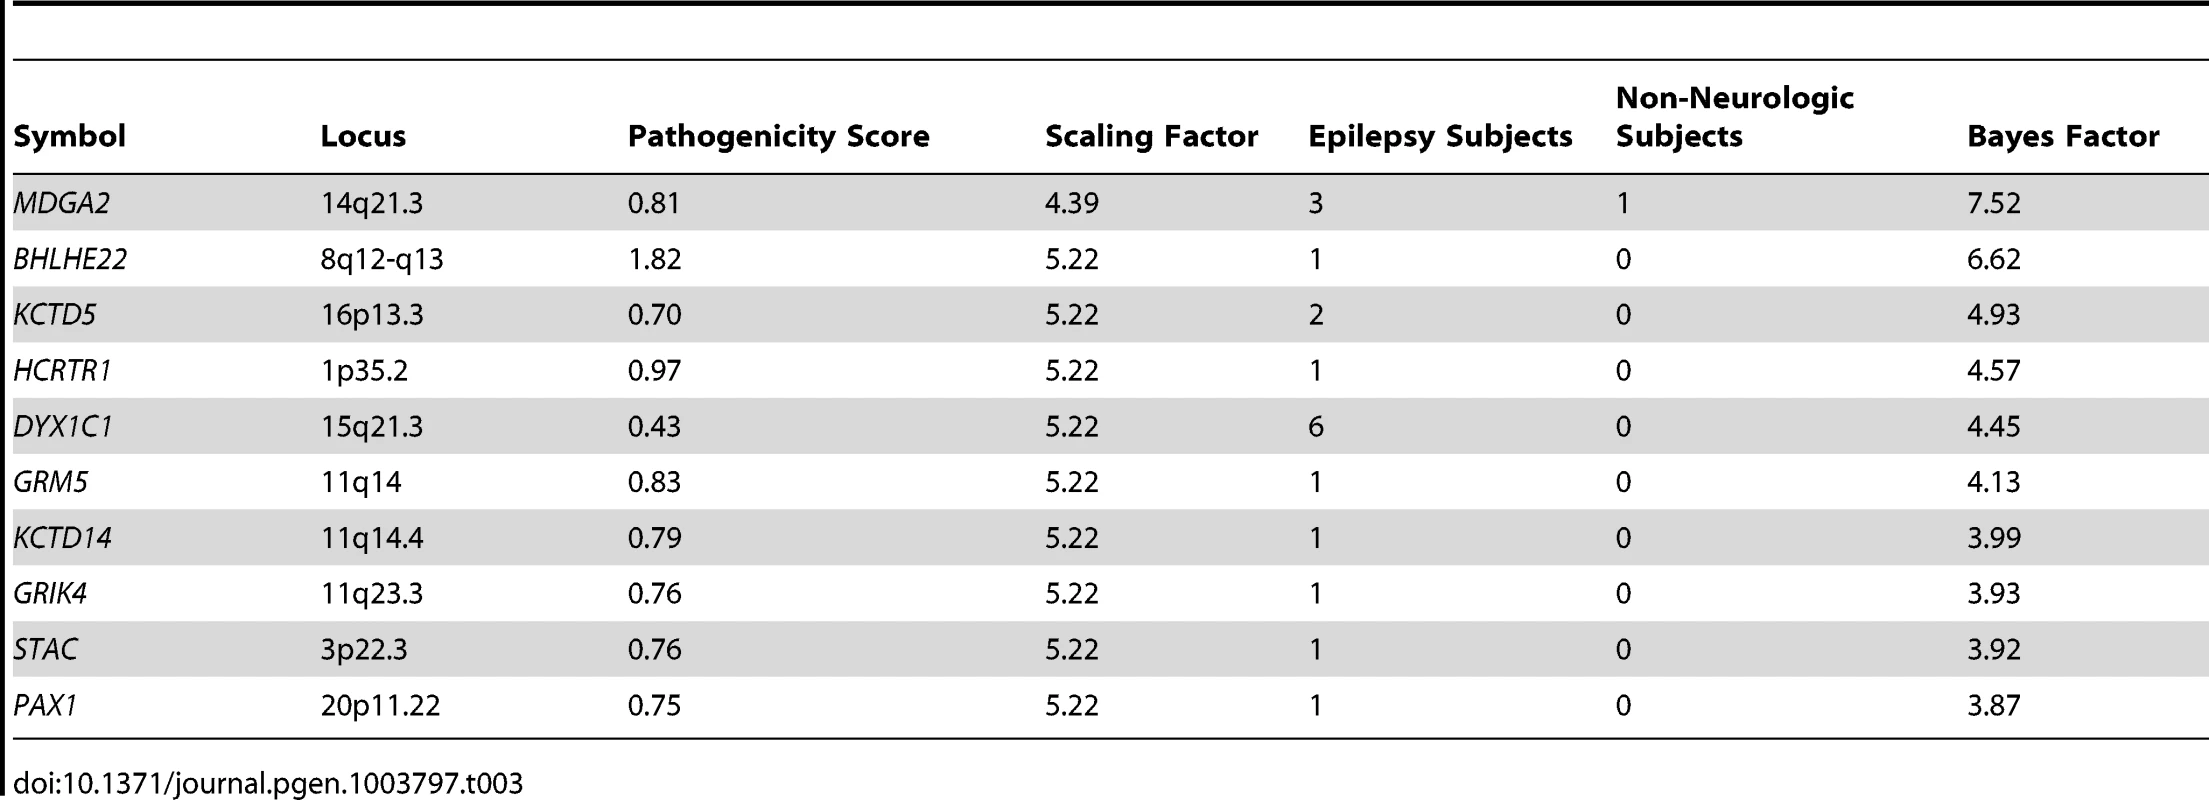 Bayes factors of interesting novel candidate genes in epilepsy.